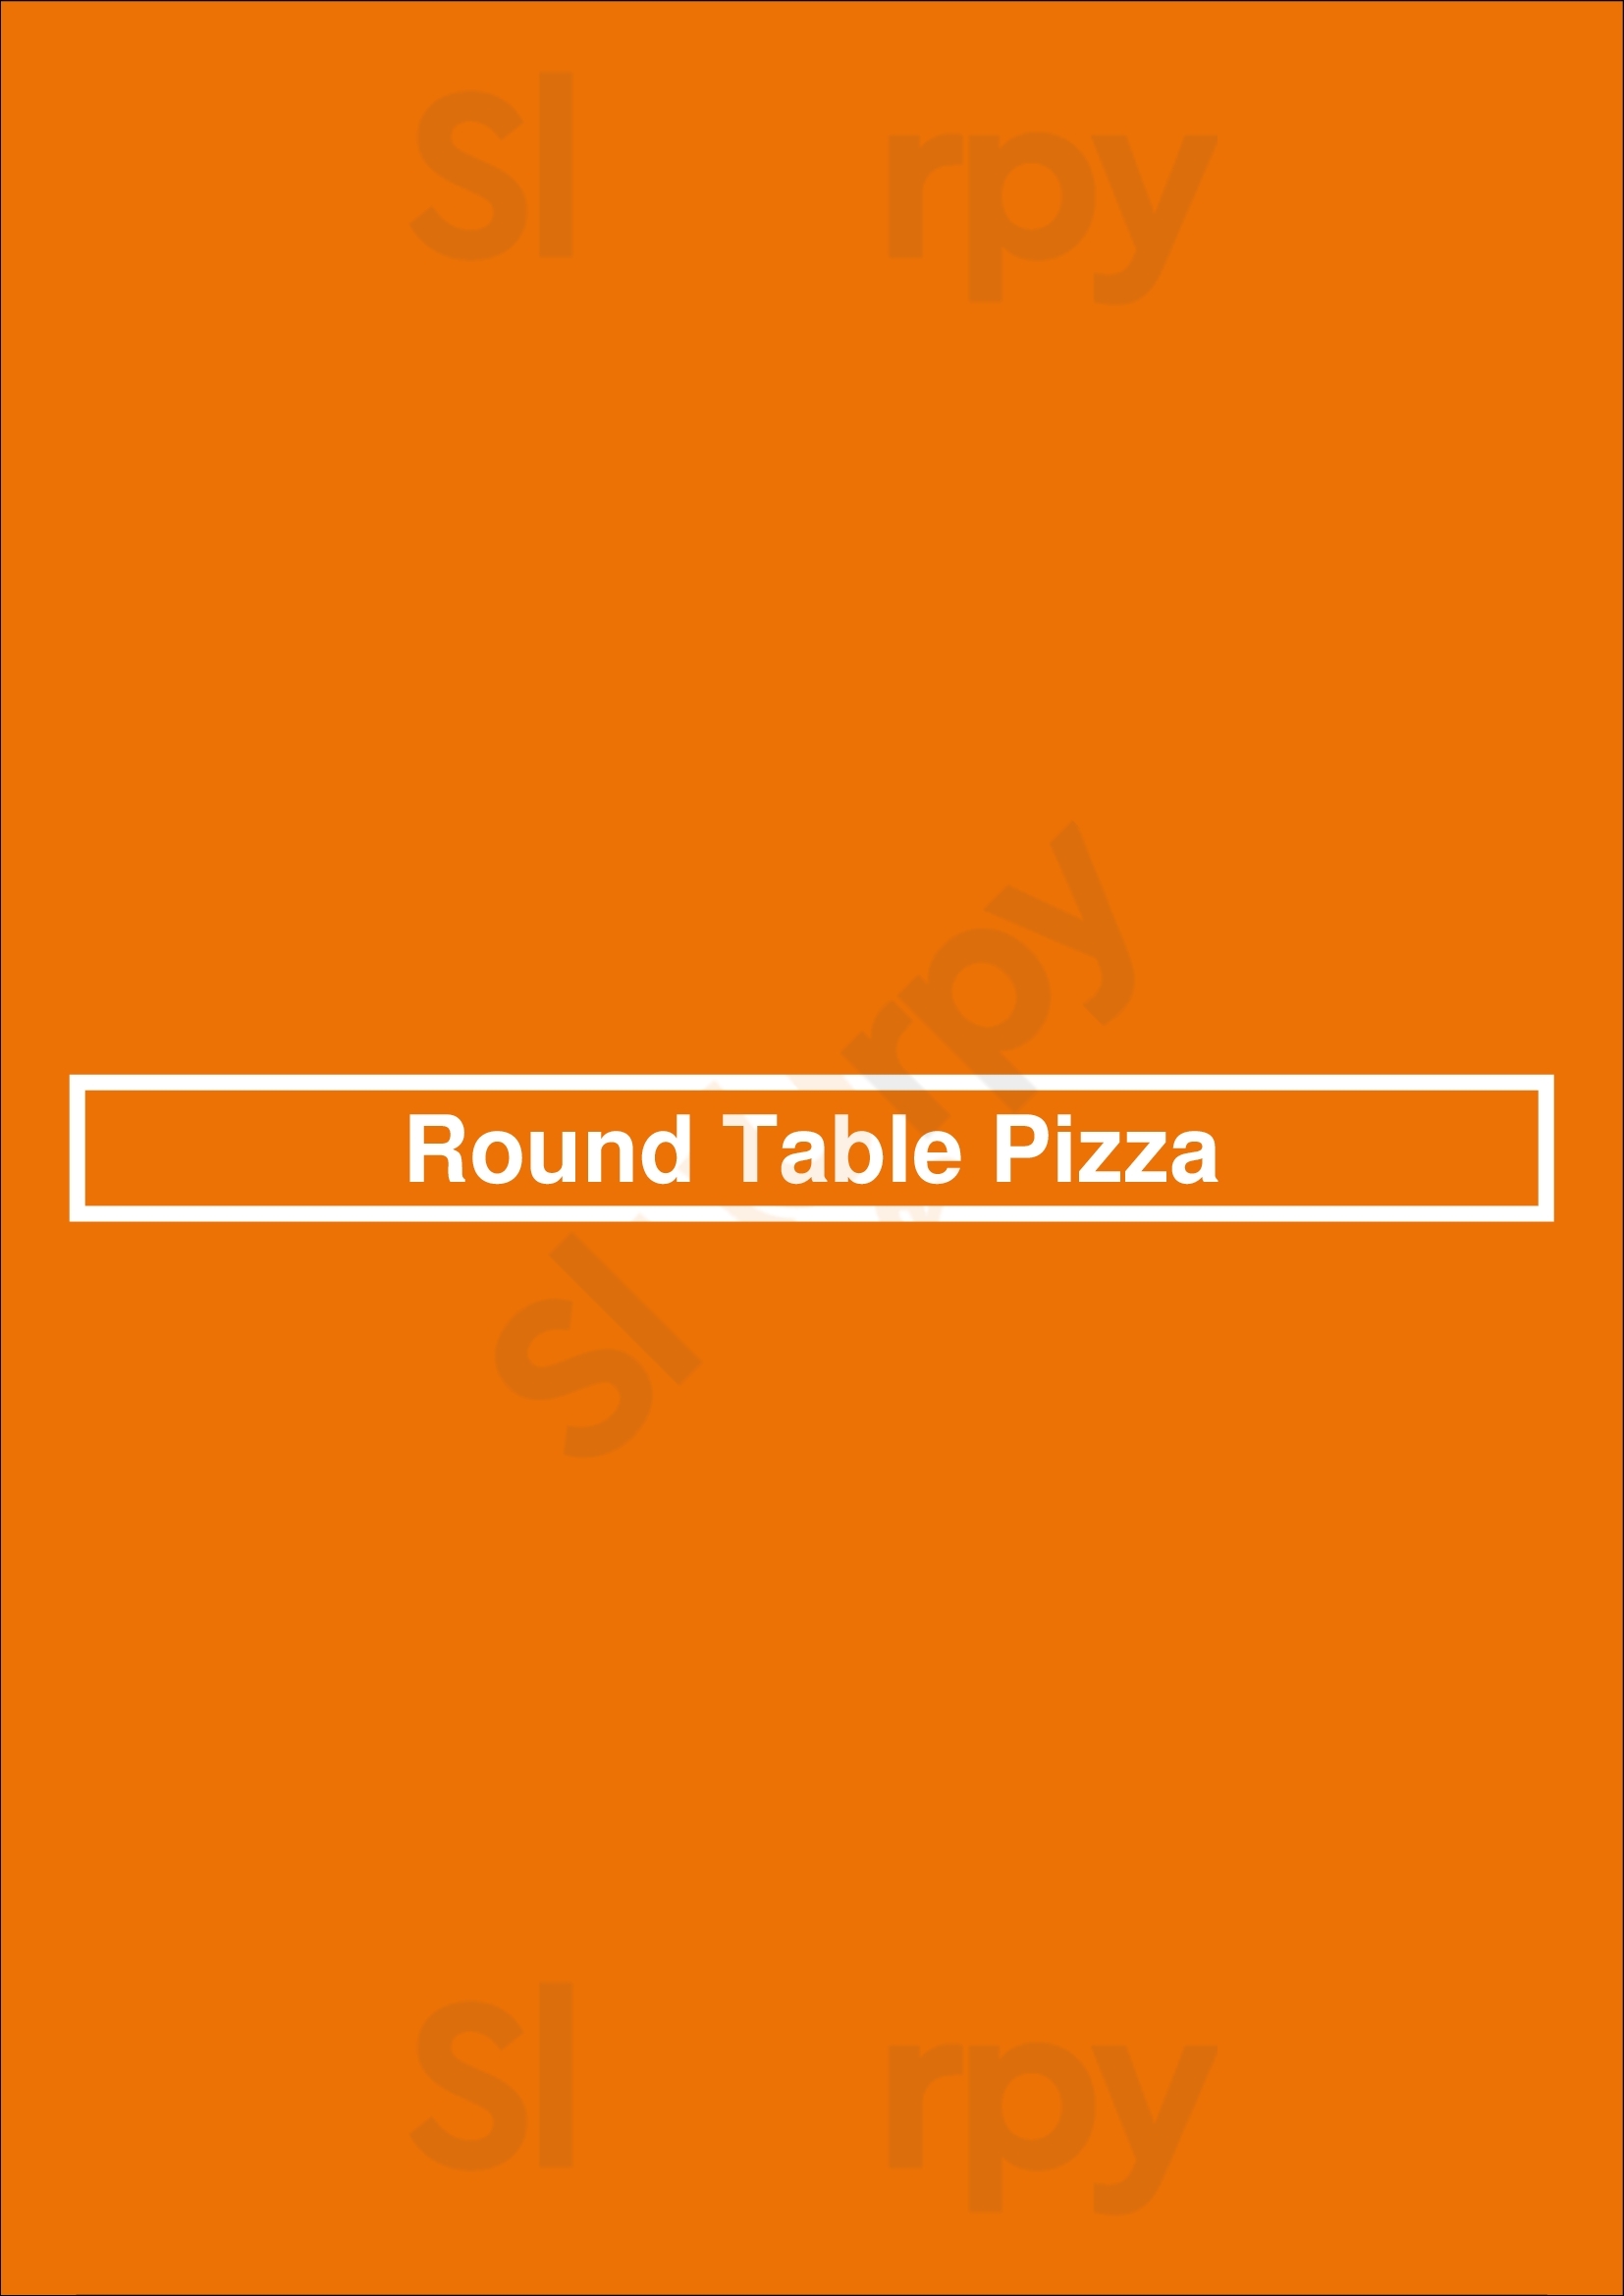 Round Table Pizza San Diego Menu - 1